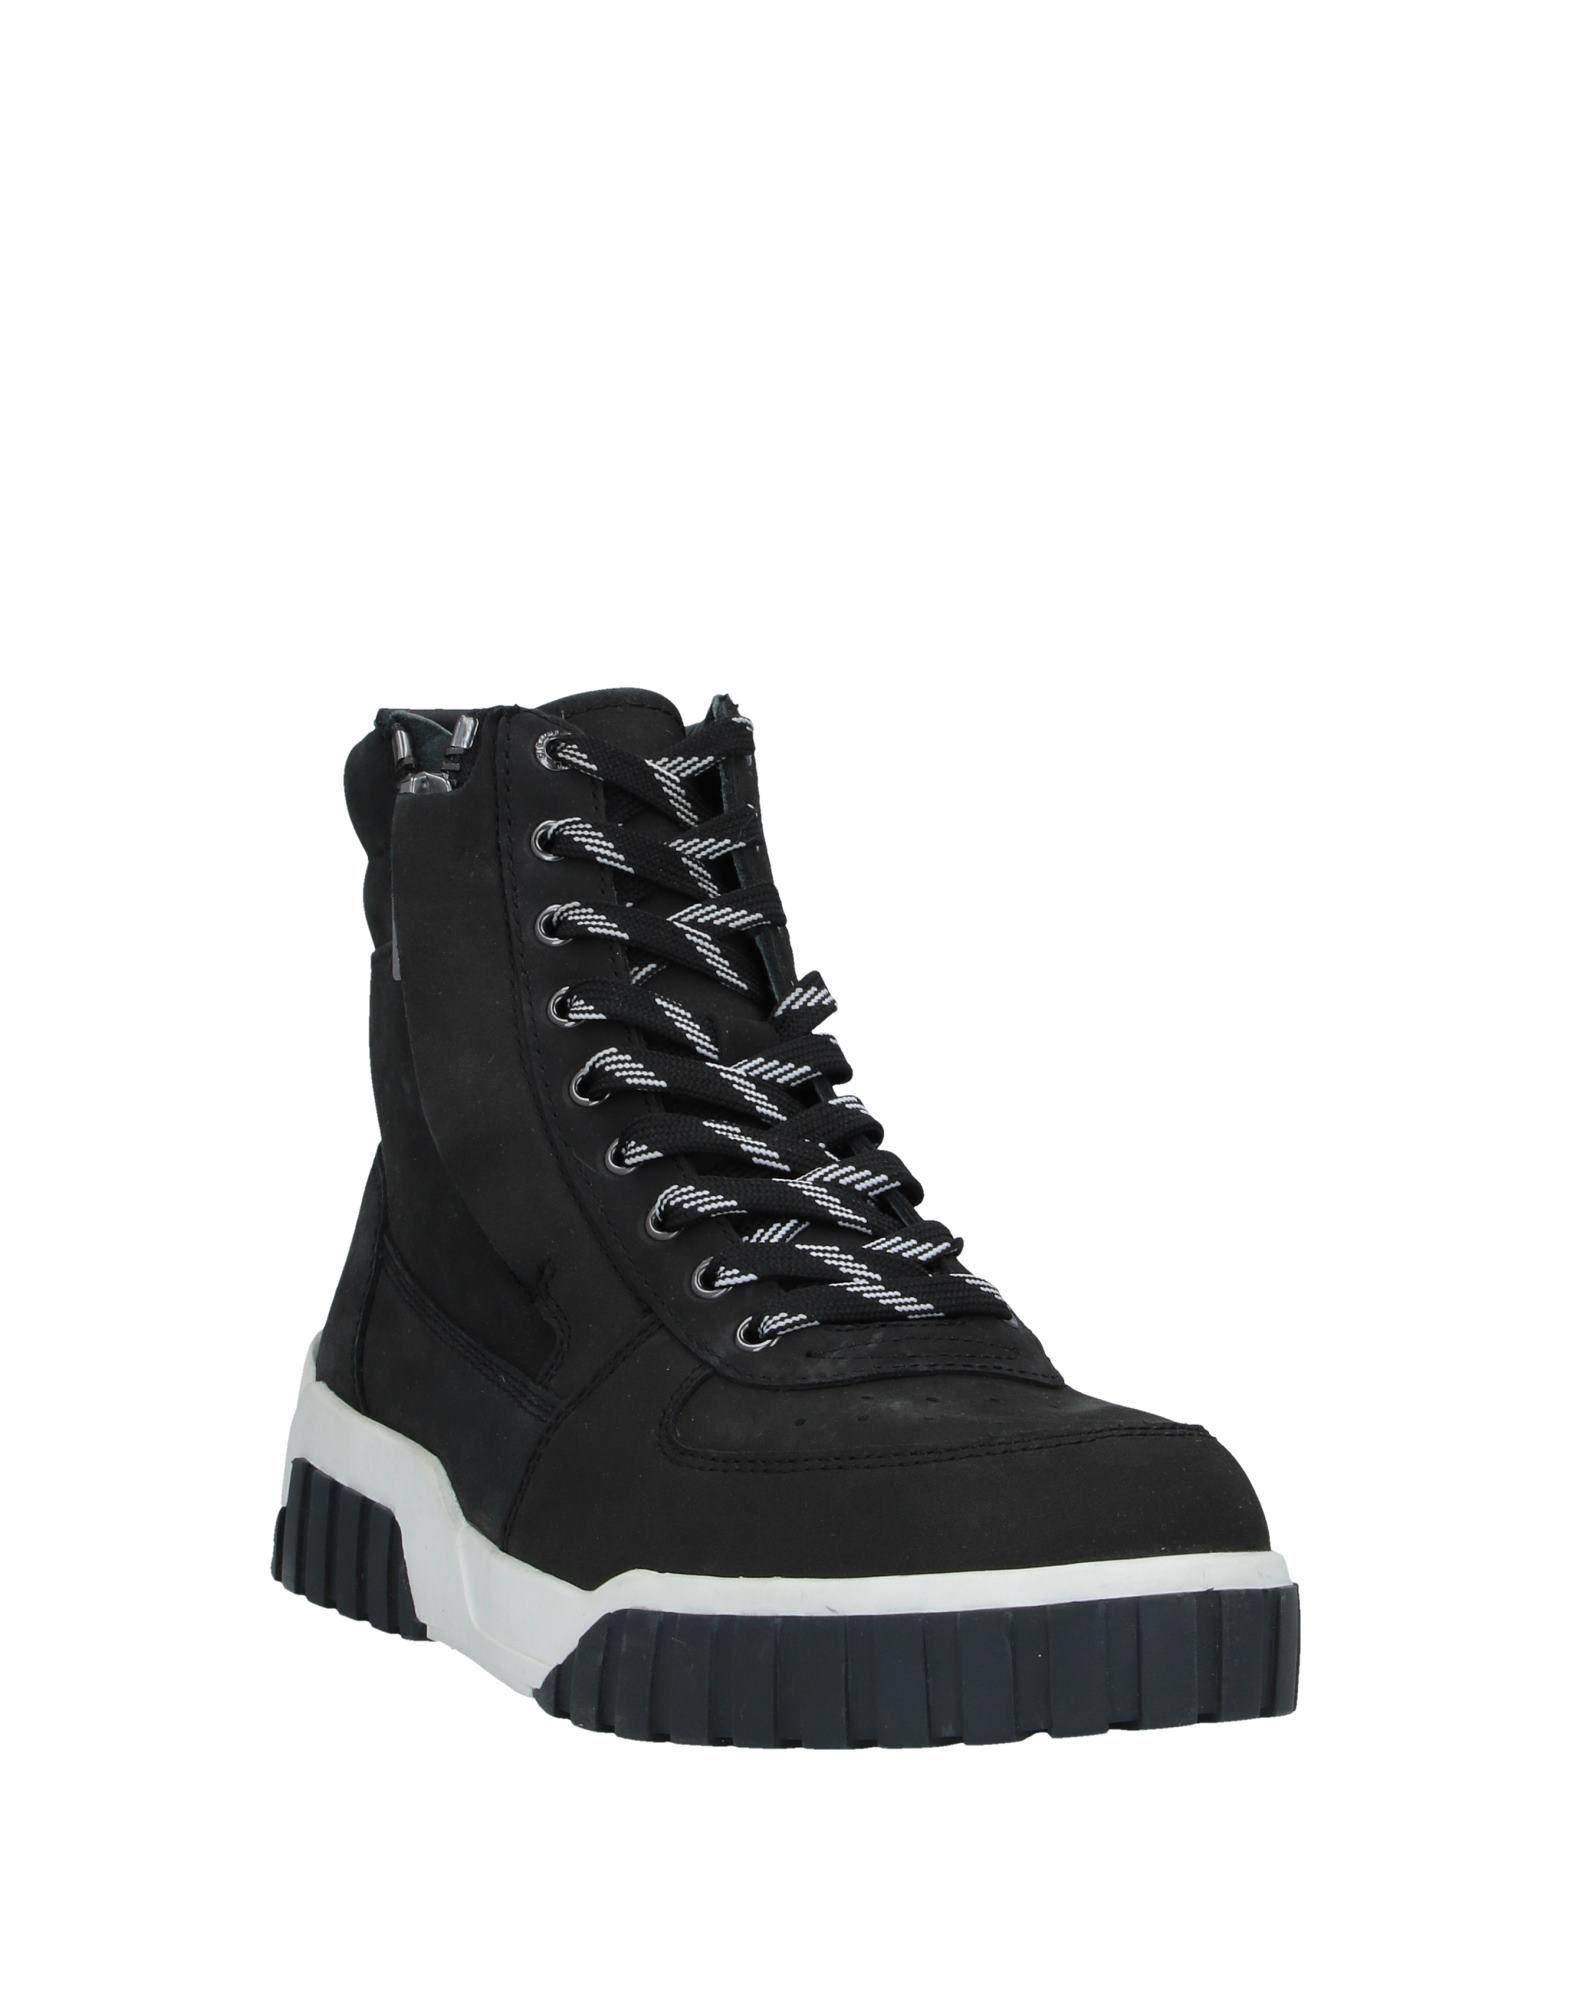 DIESEL Ankle Boots in Black for Men - Lyst